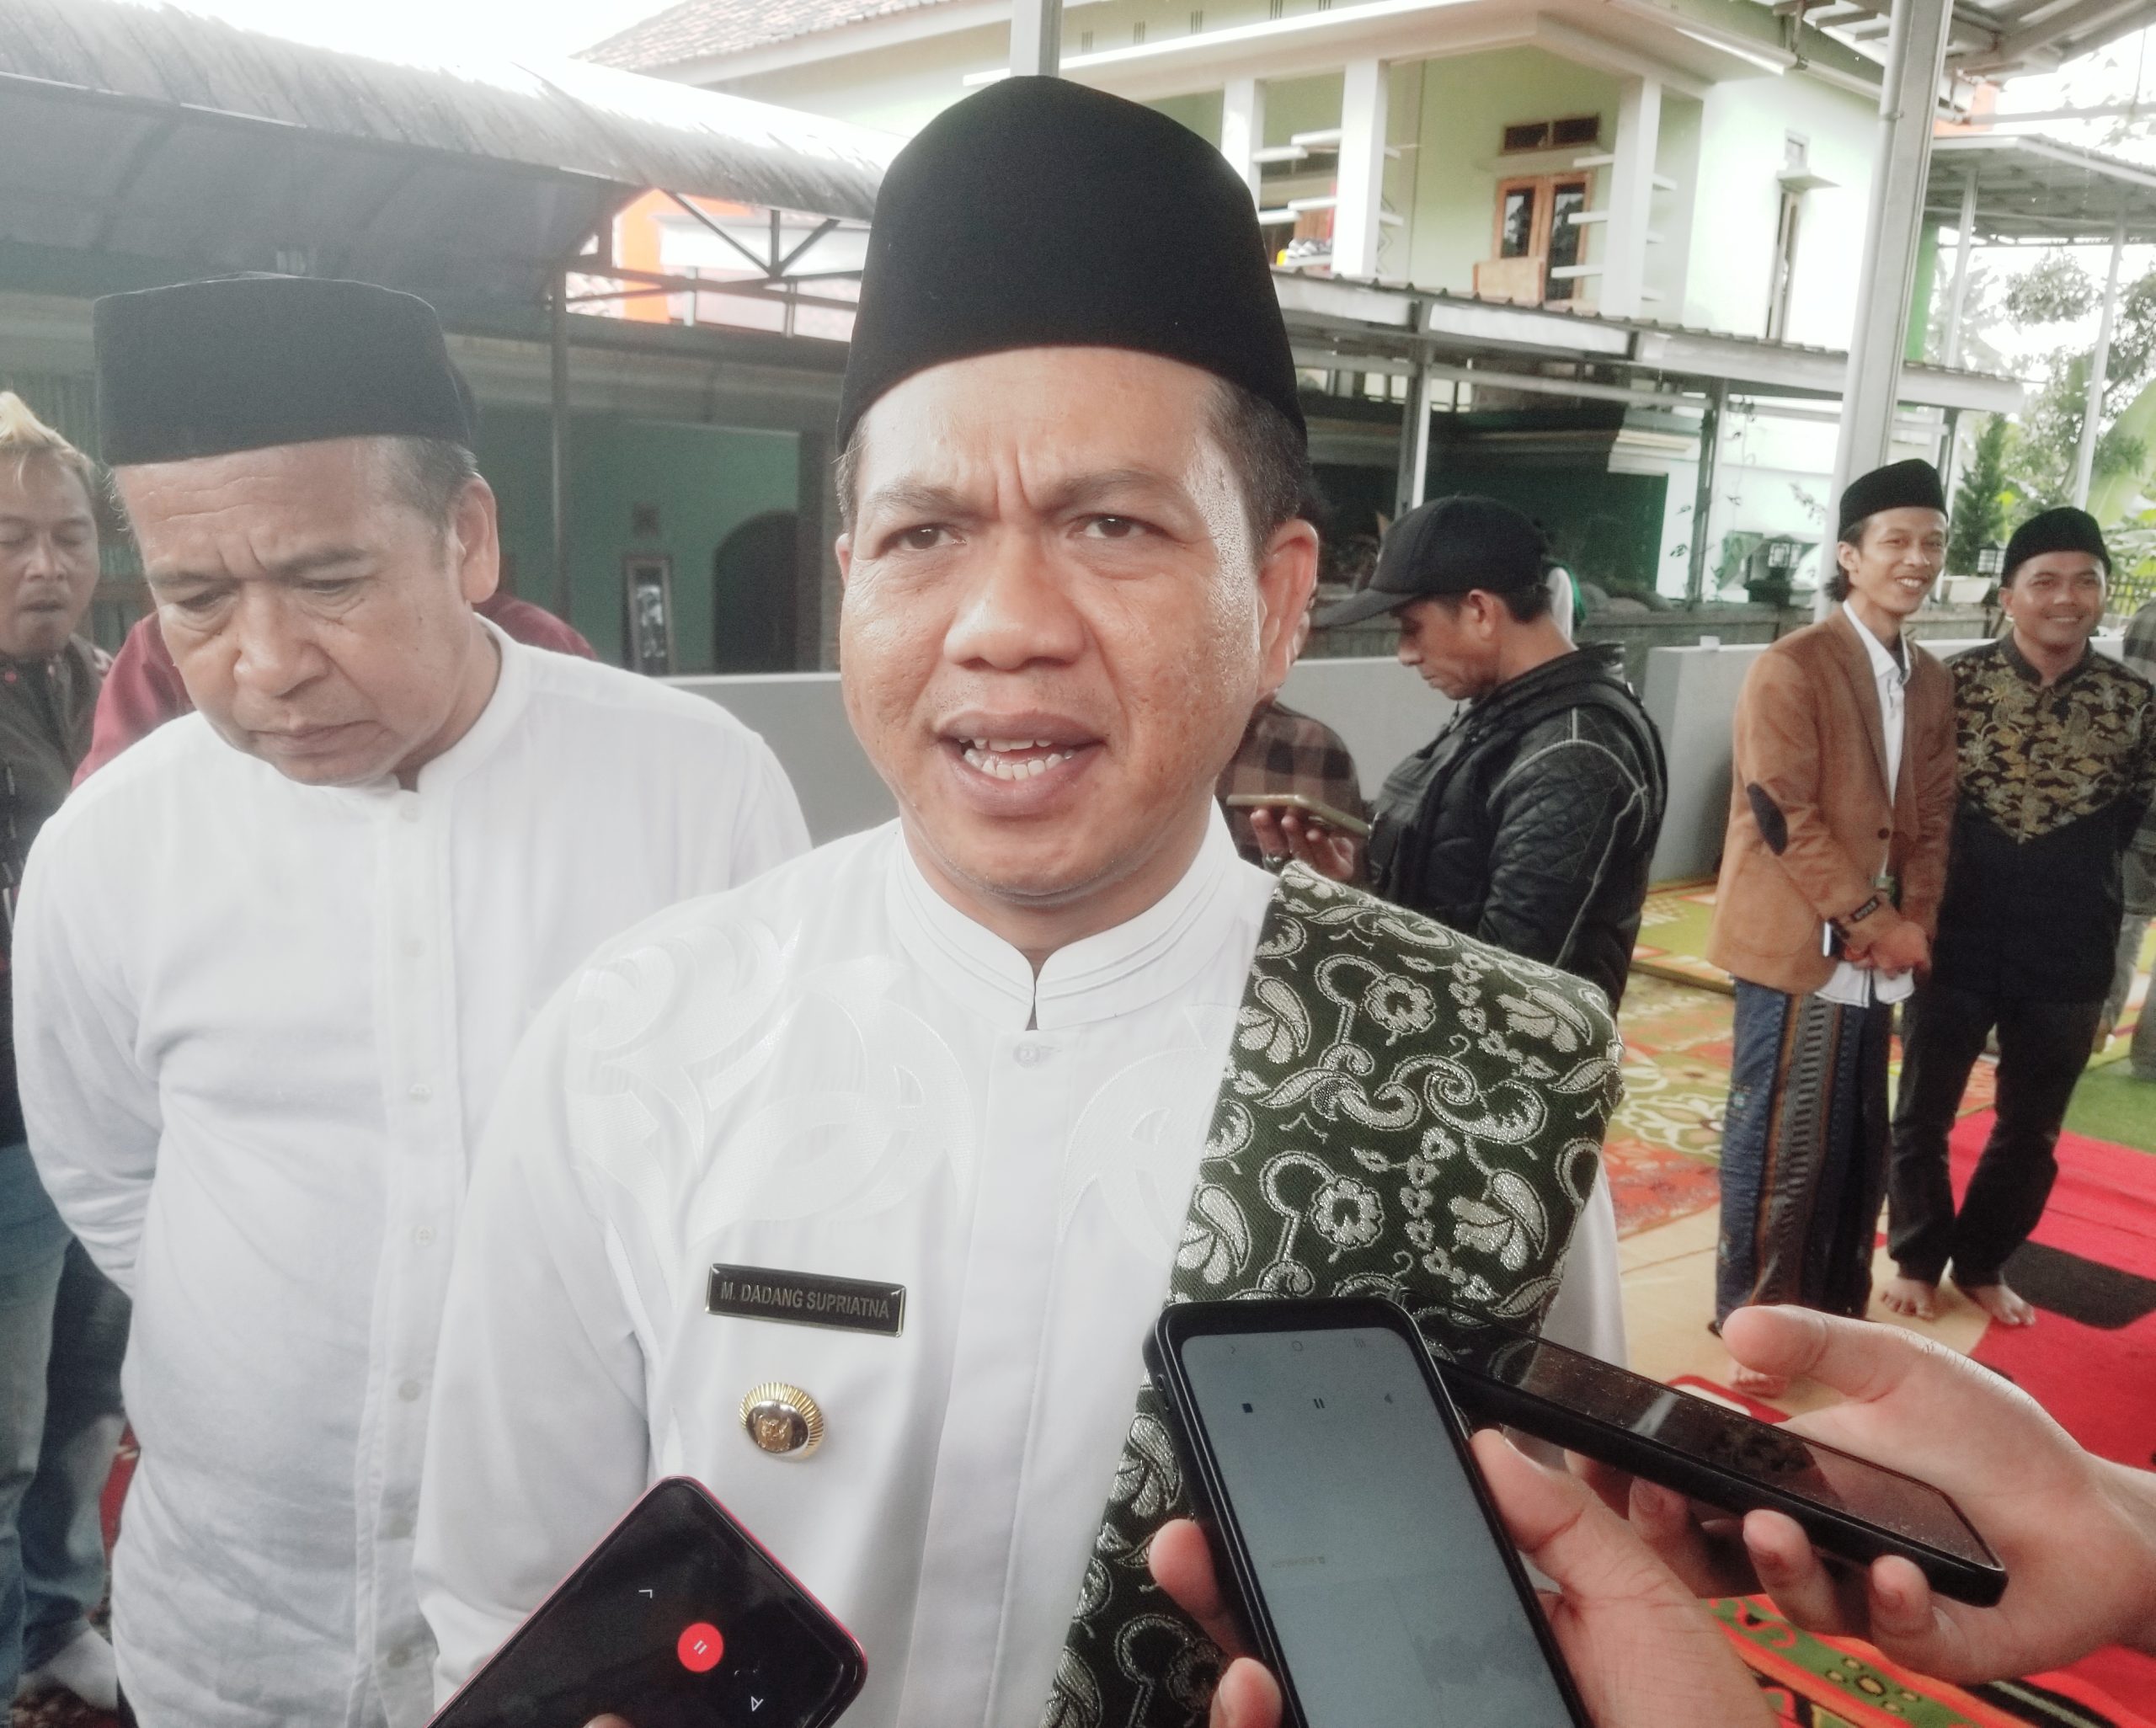 Terkait Flyover Bojongsoang, Bupati Bandung Bakal Segera Temui Gubernur